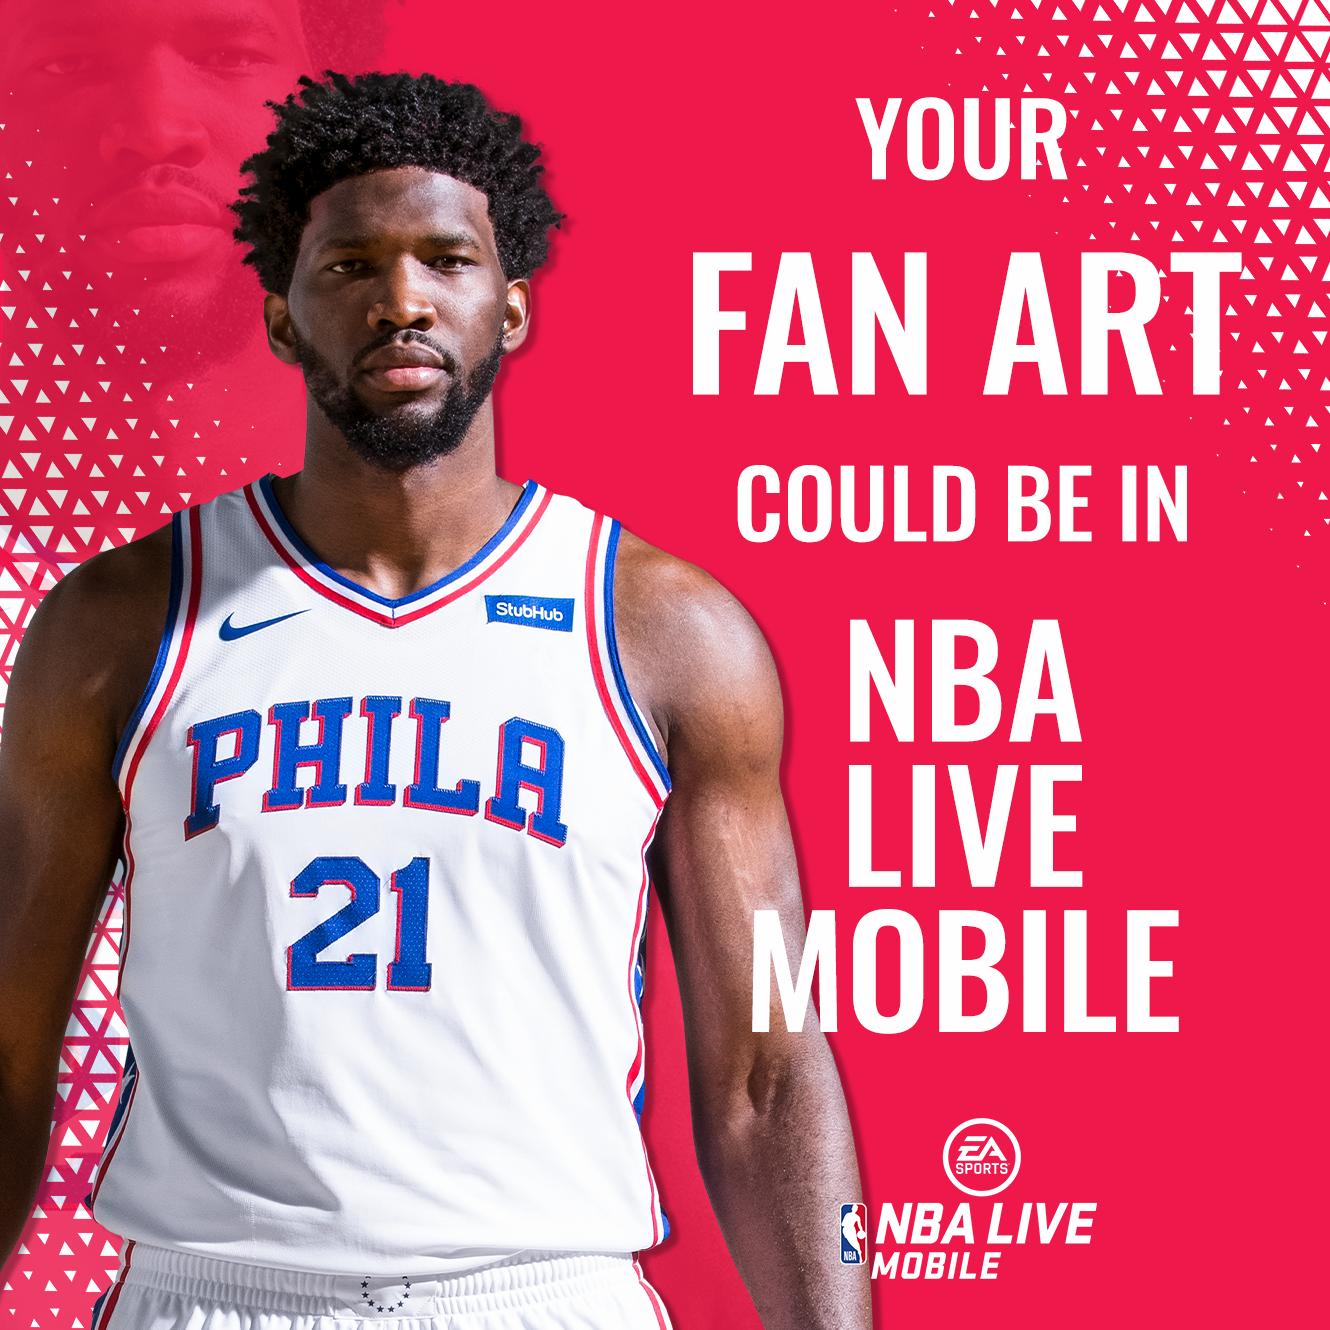 EA SPORTS NBA LIVE MOBILE on Twitter